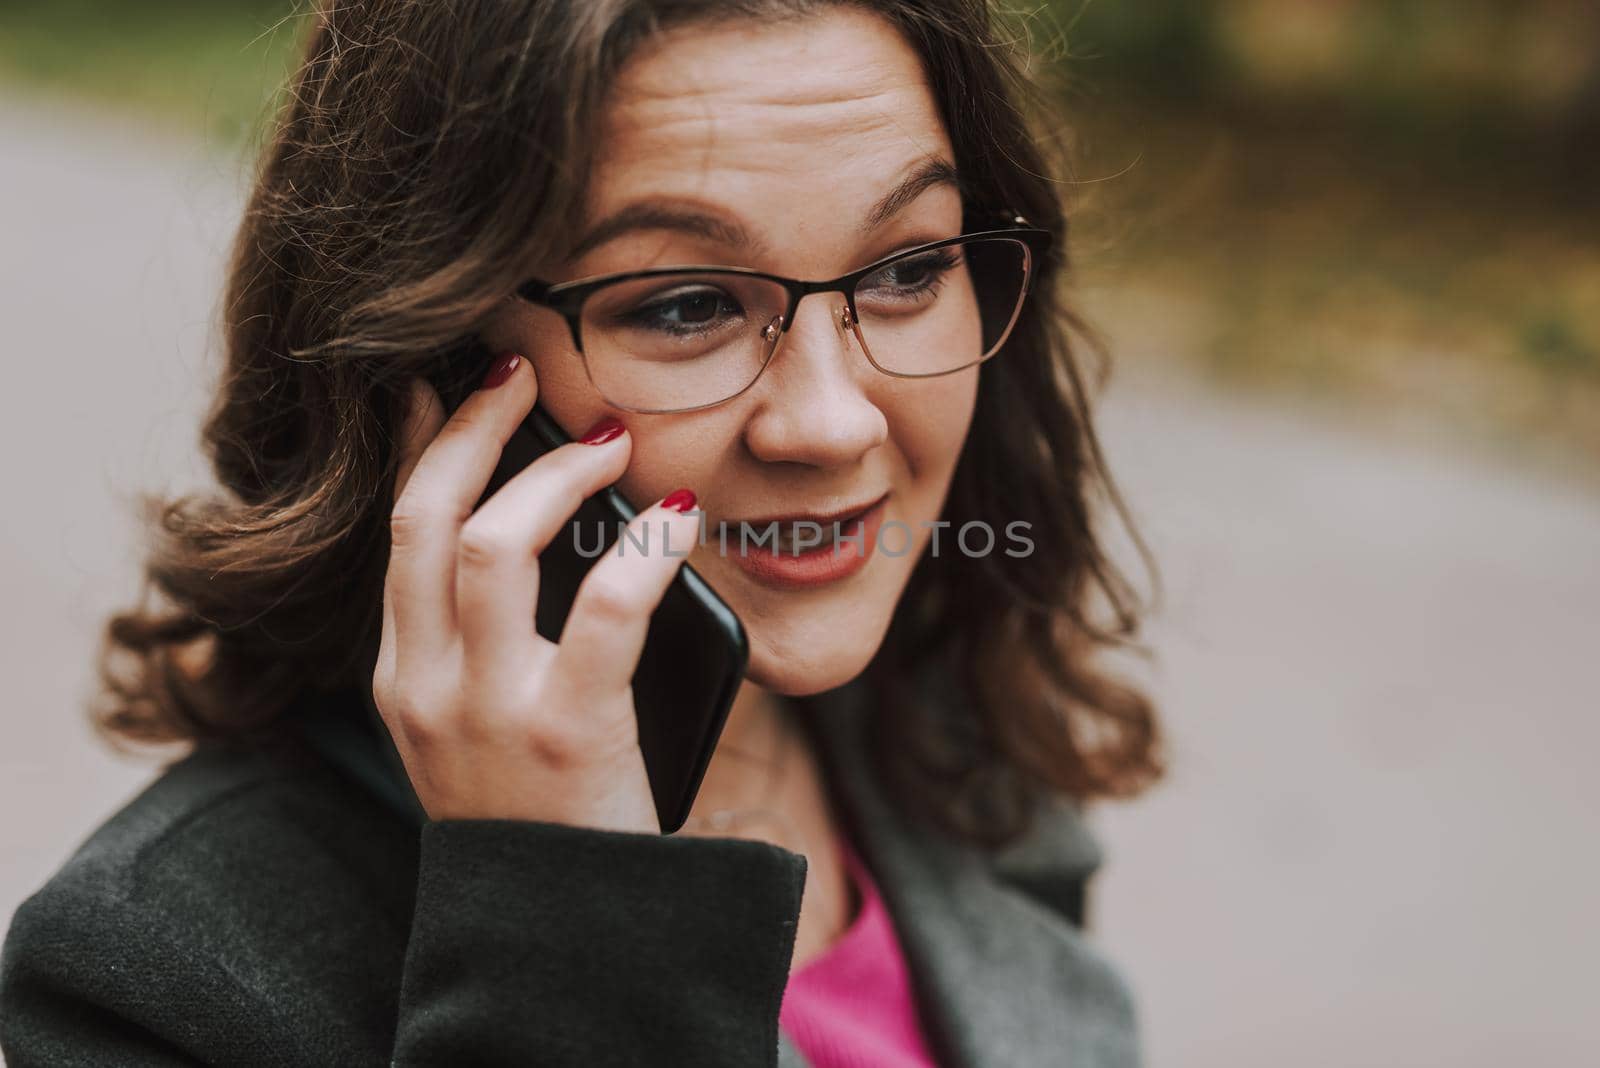 Pretty lady having pleasant phone talk outdoors by monakoartstudio